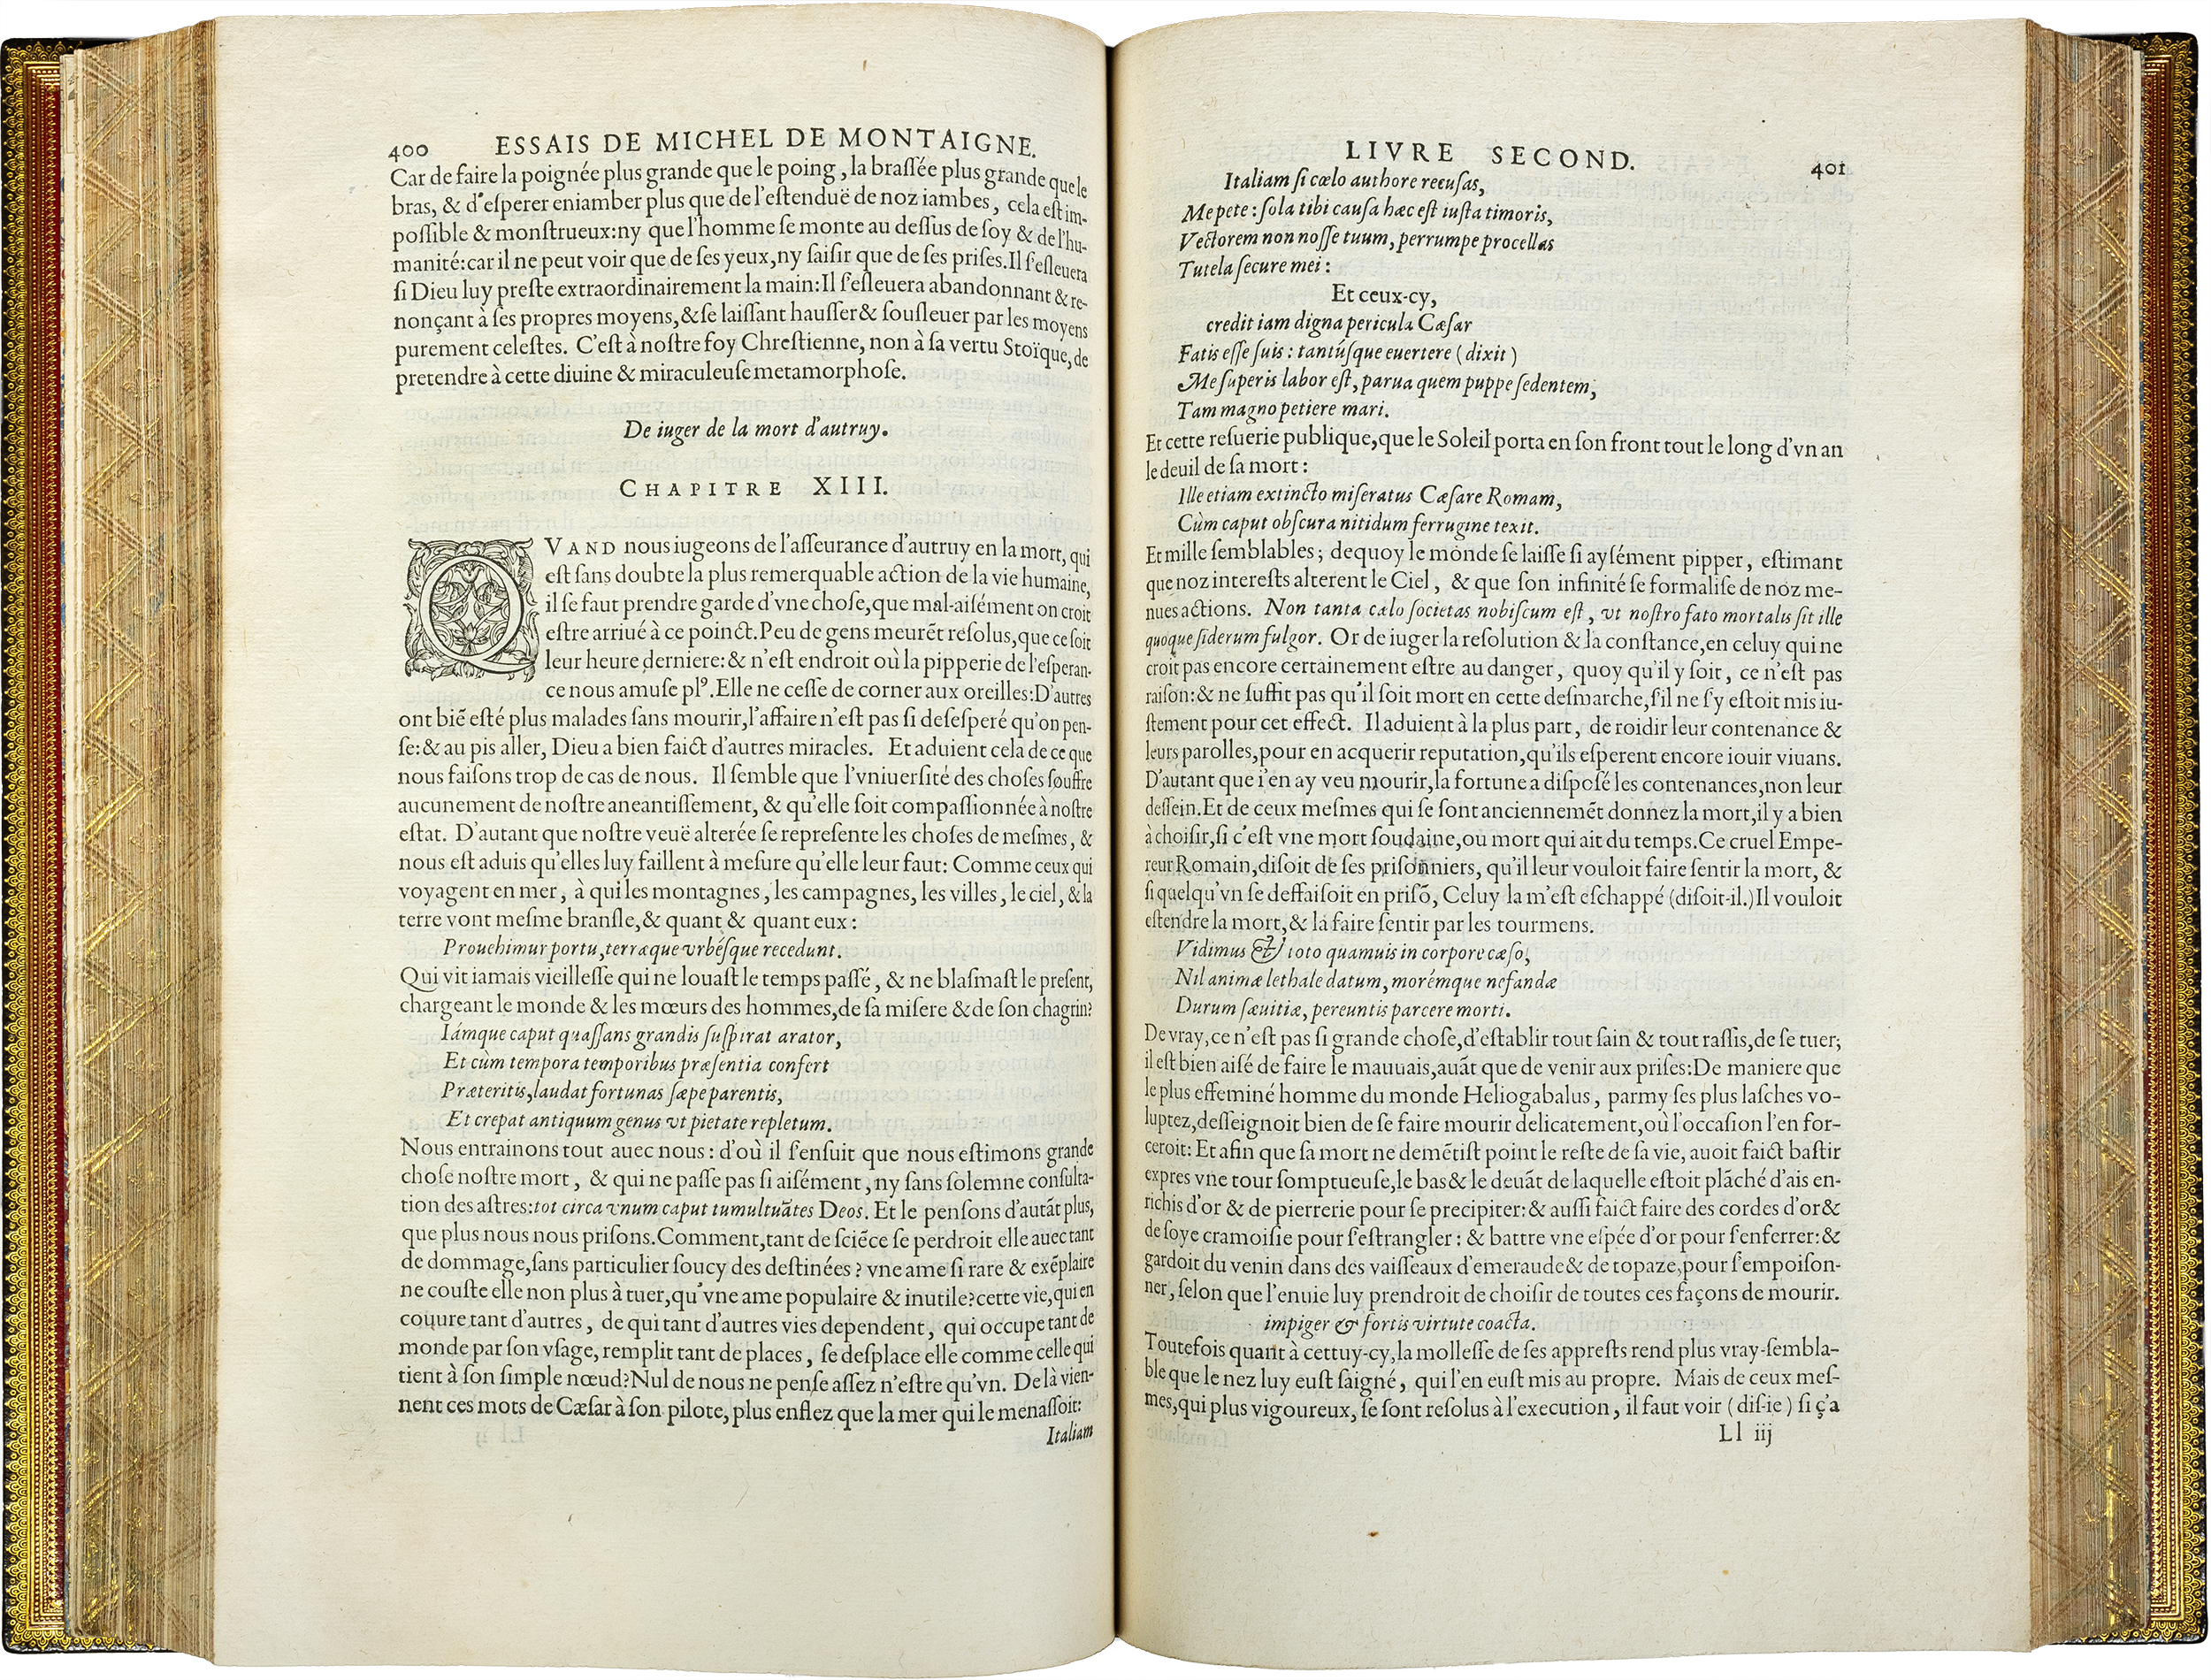 Montaigne-essais-1595-lortic-binding.png